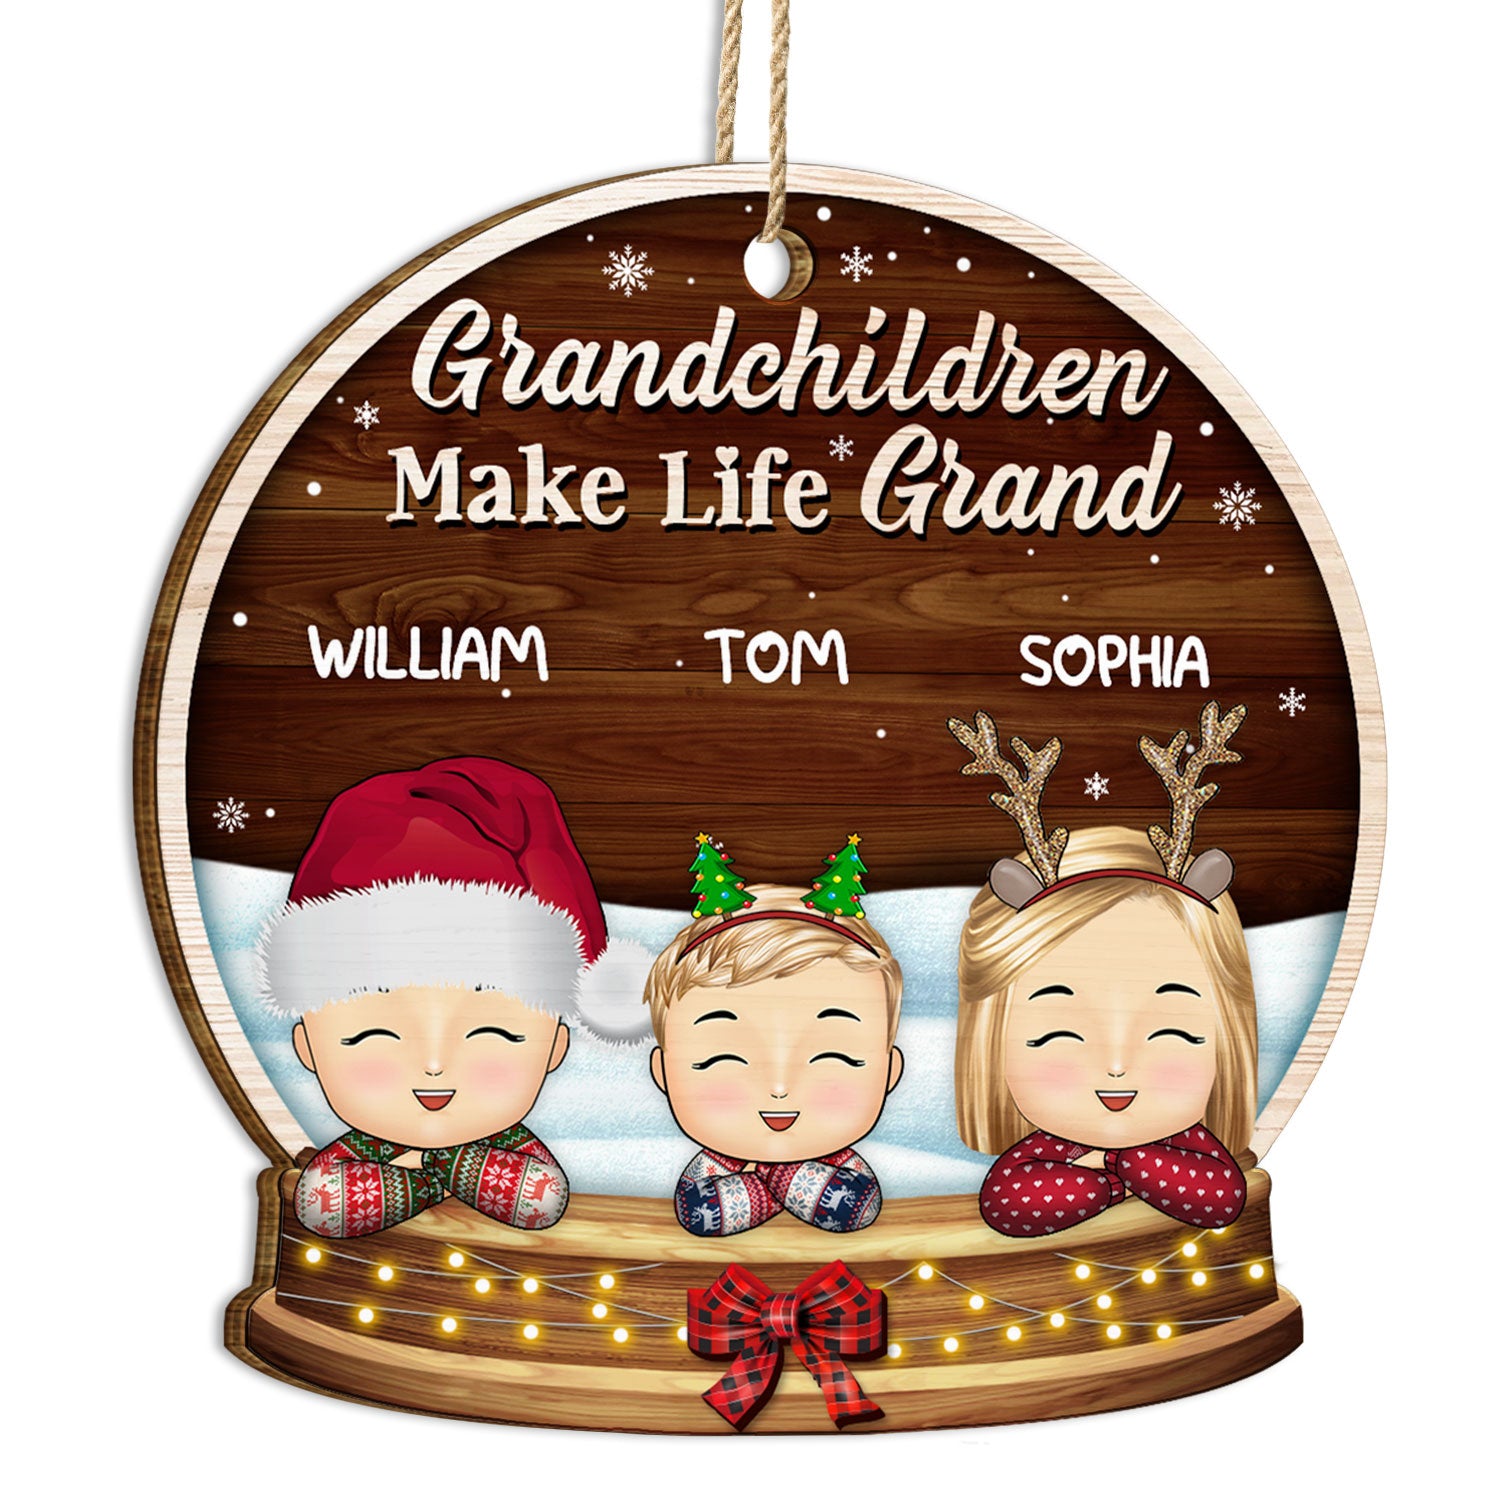 Grandchildren Make Life Grand - Christmas, Loving Gift For Grandpa, Grandma, Grandparents - Personalized Custom Shaped Wooden Ornament